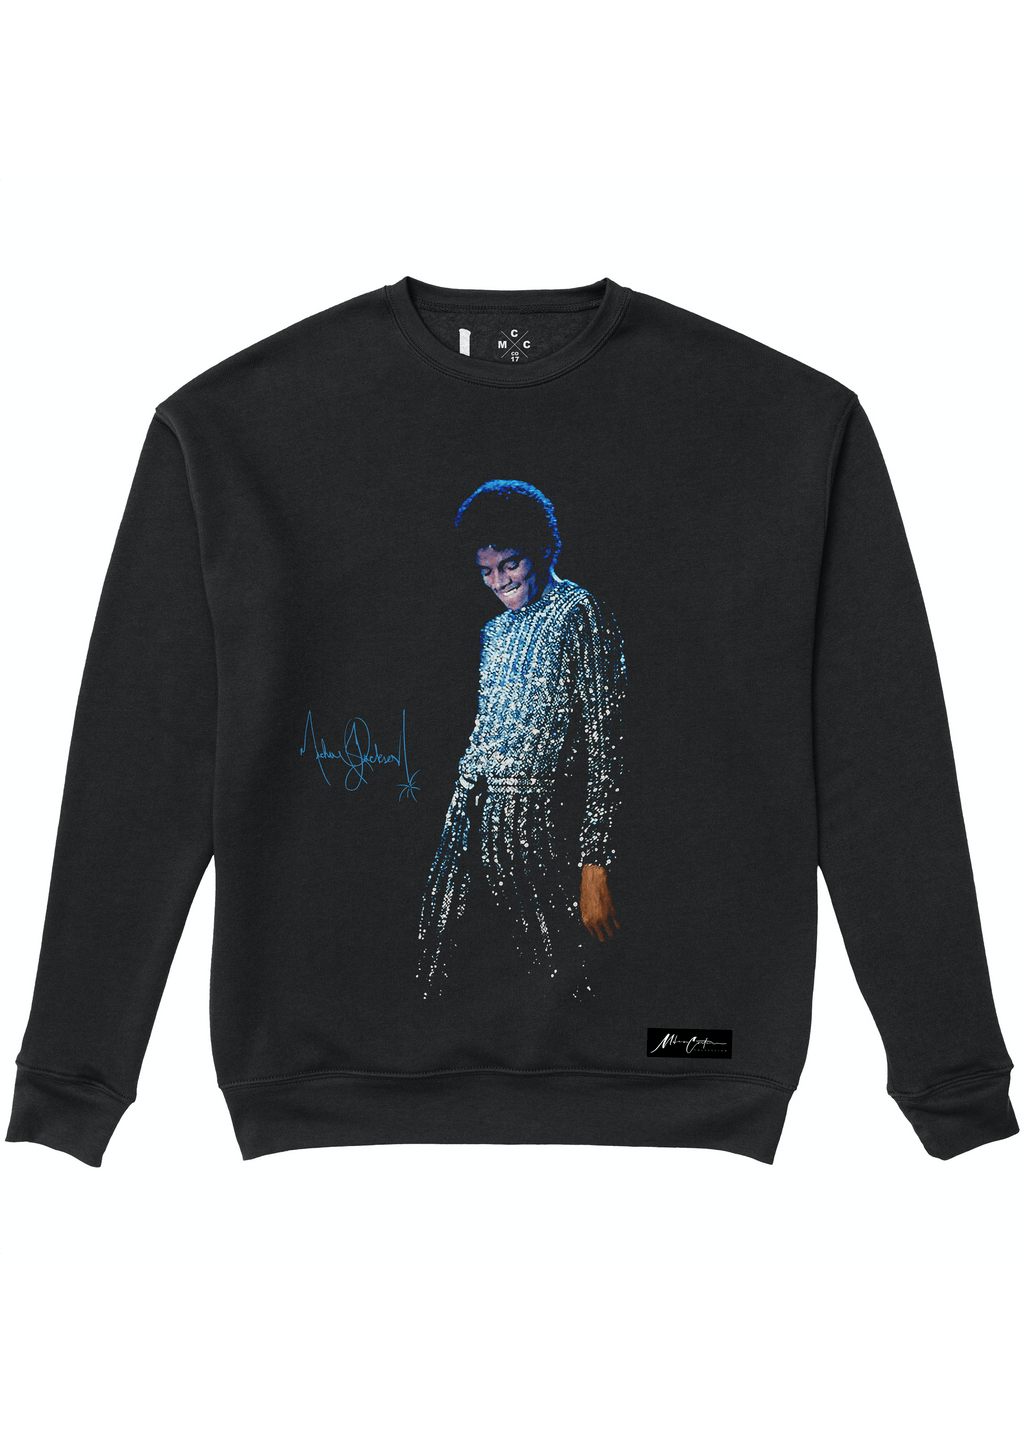 Miles Carter Designs Sweatshirt S Michael Jackson Rock With You